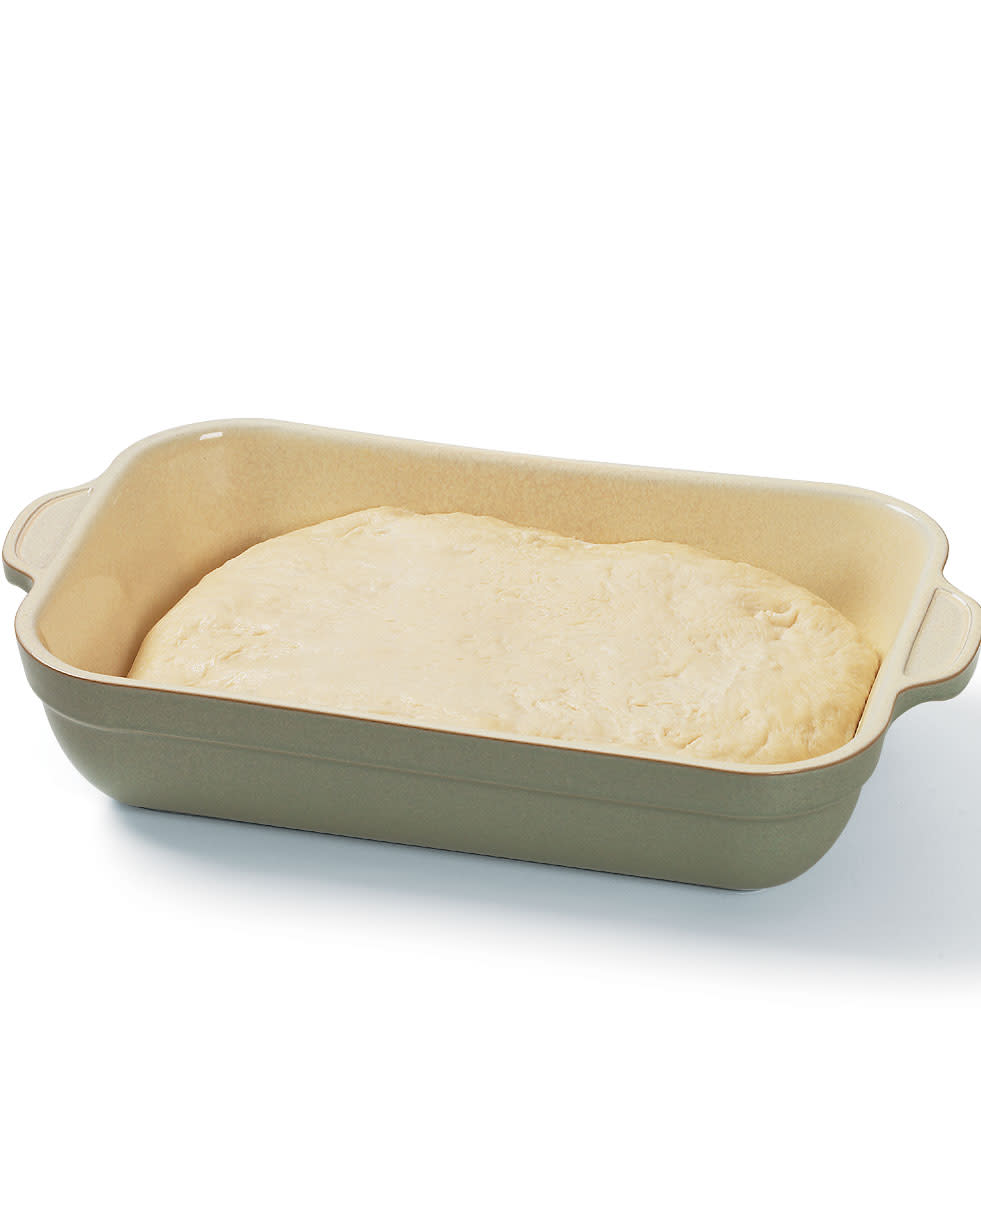 Tips-Rectangular-Rise-for-Dough-Proofing